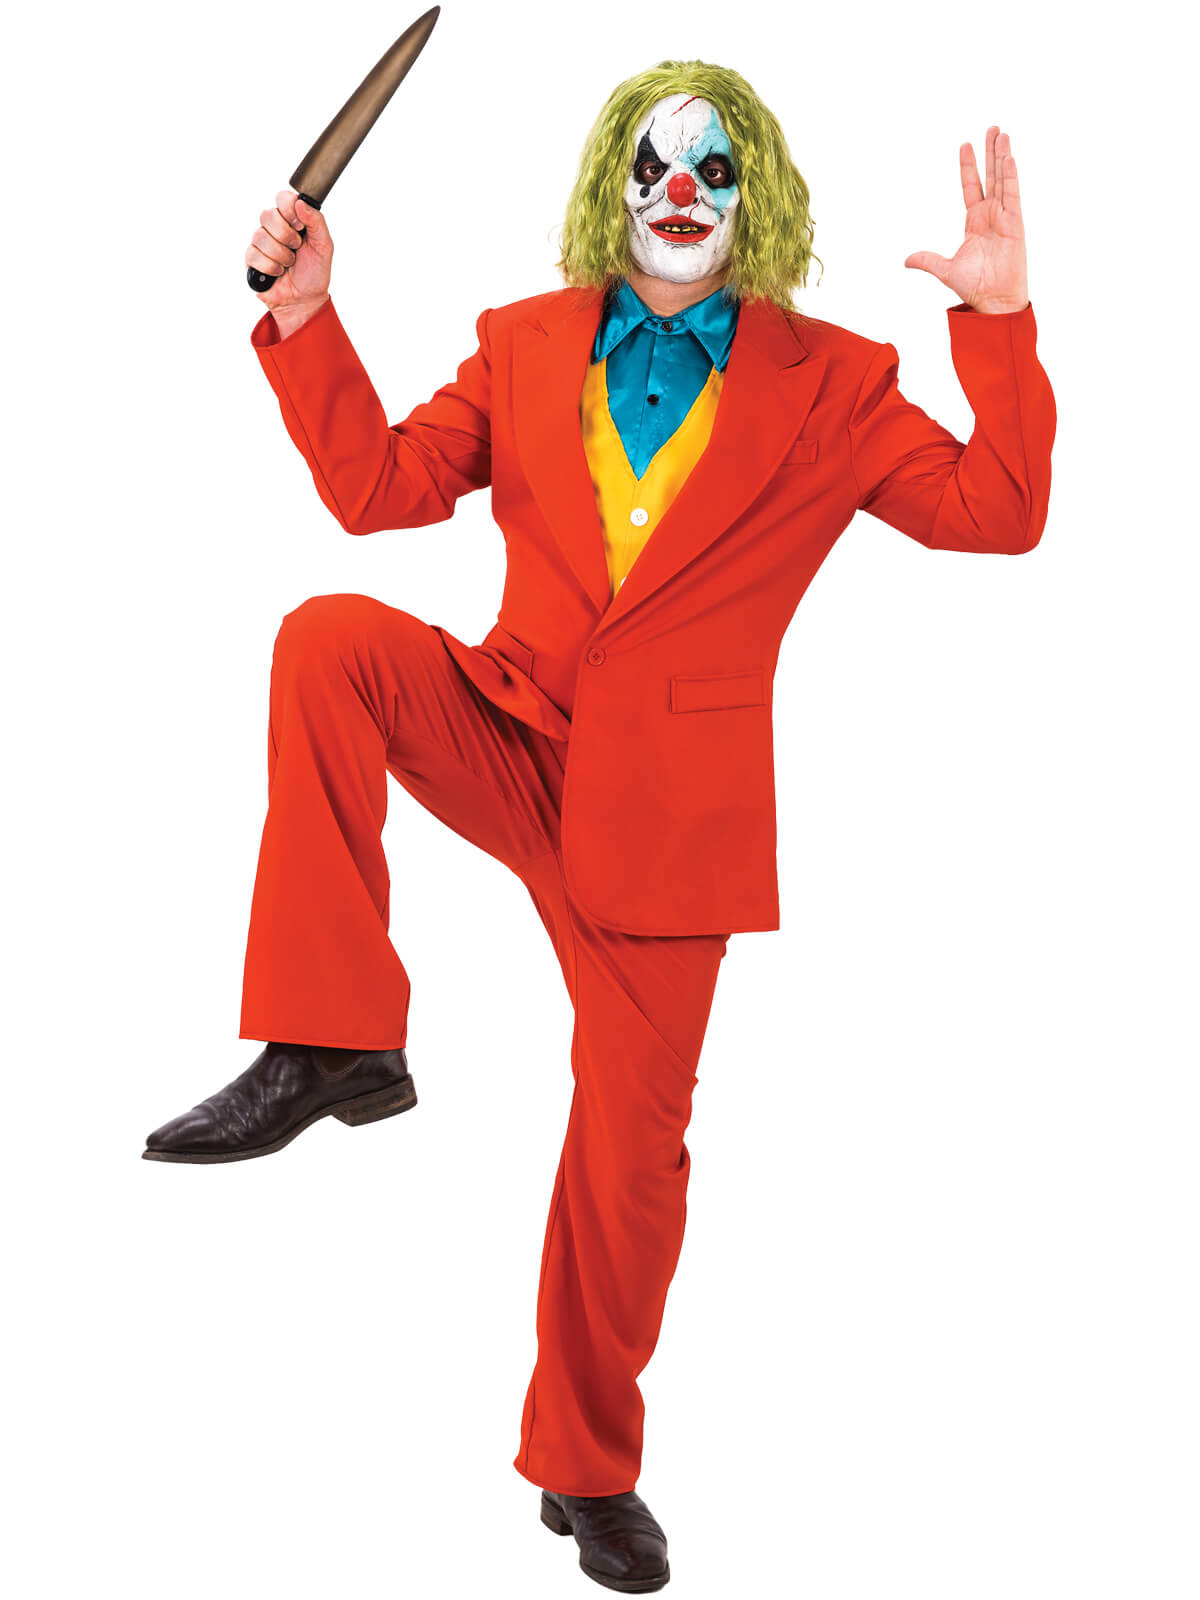 Joker suit